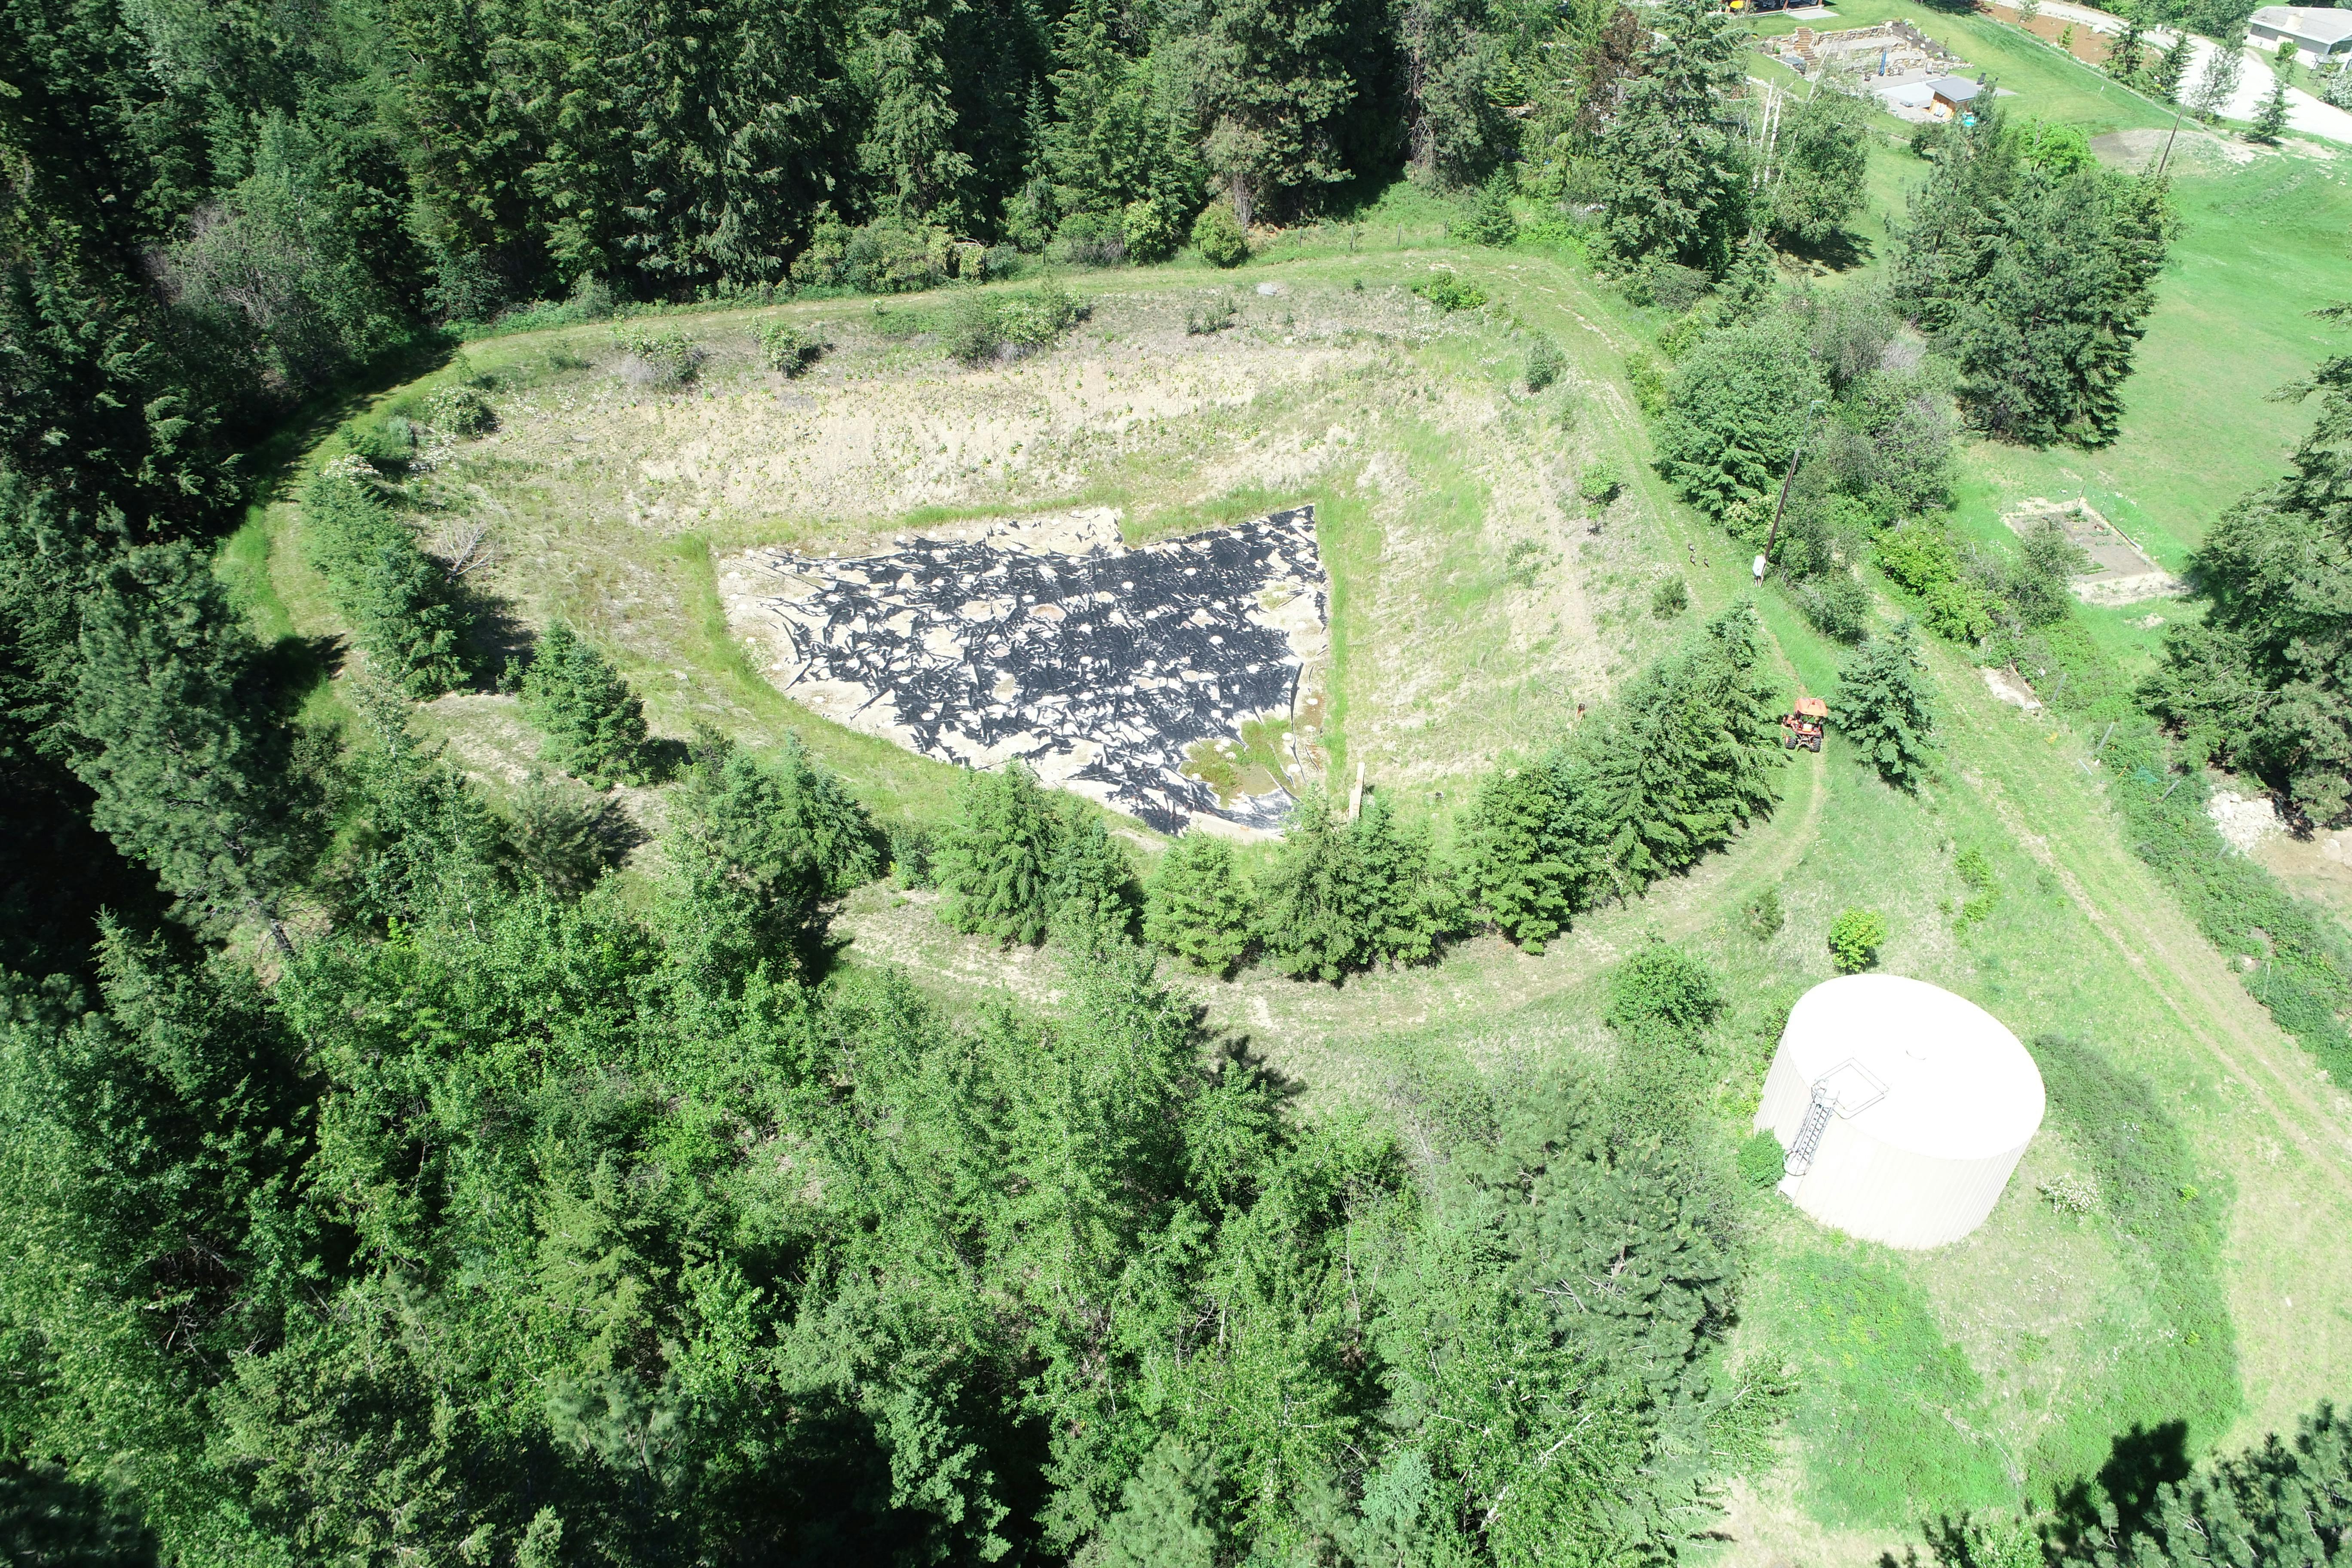 2020 Drone photo of north reservoir prior to restoration works